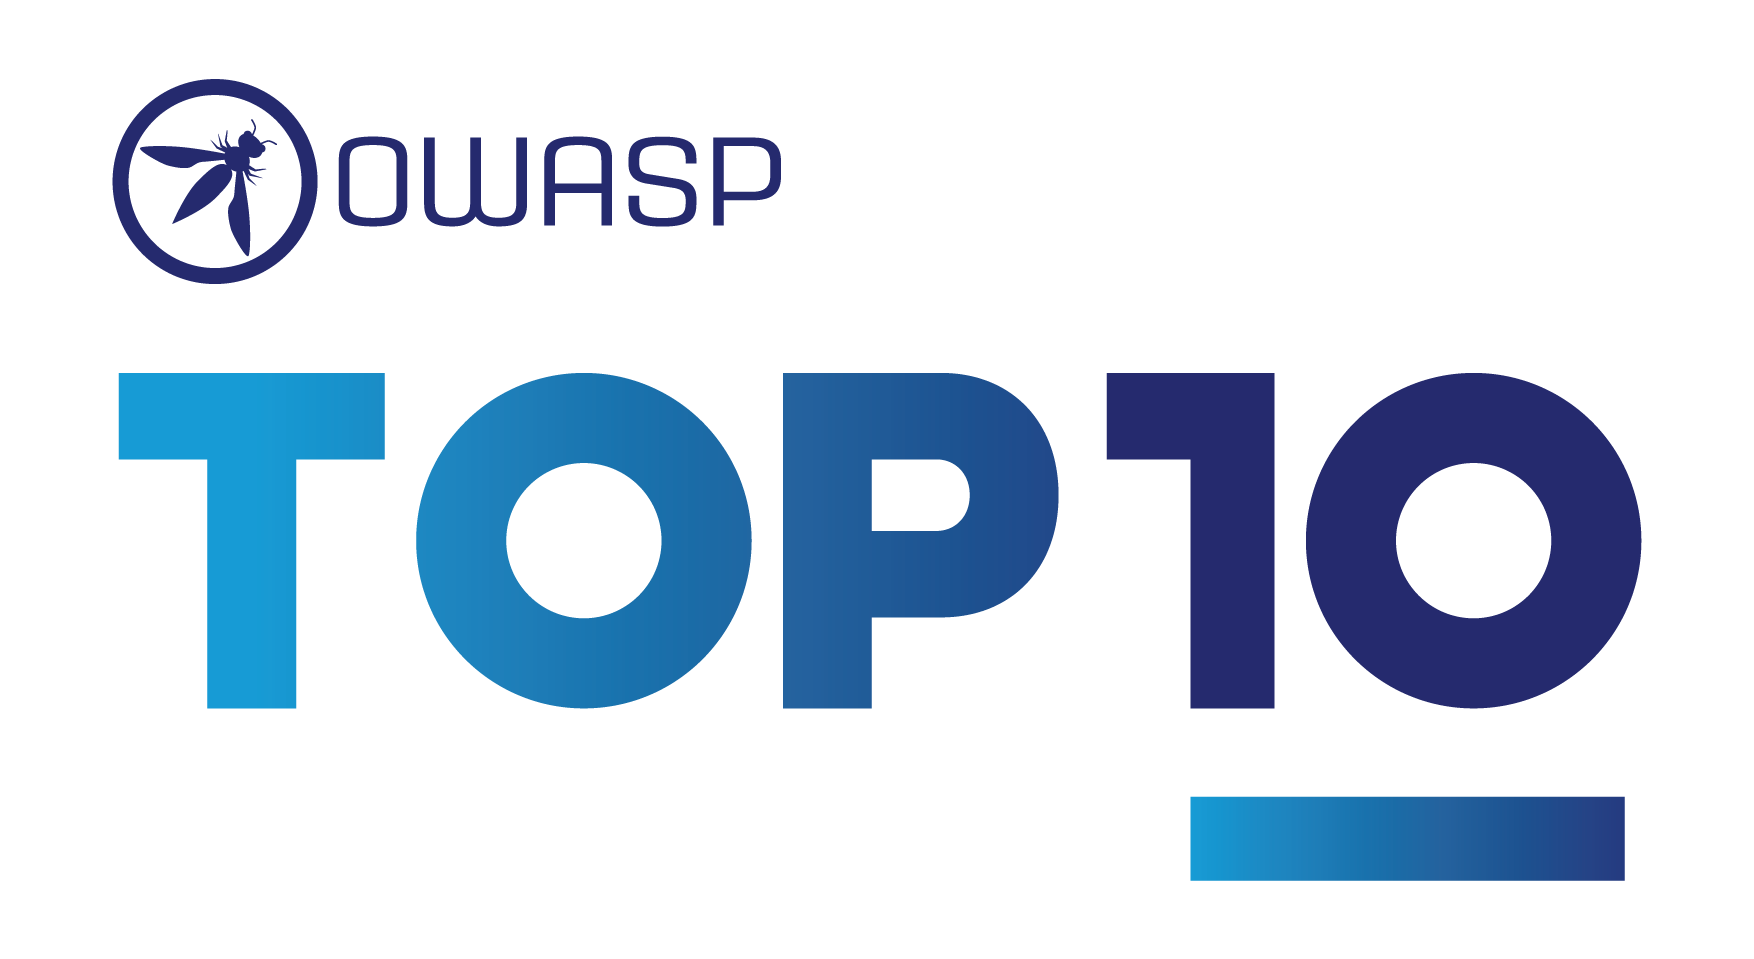 OWASP Top 10 Logo